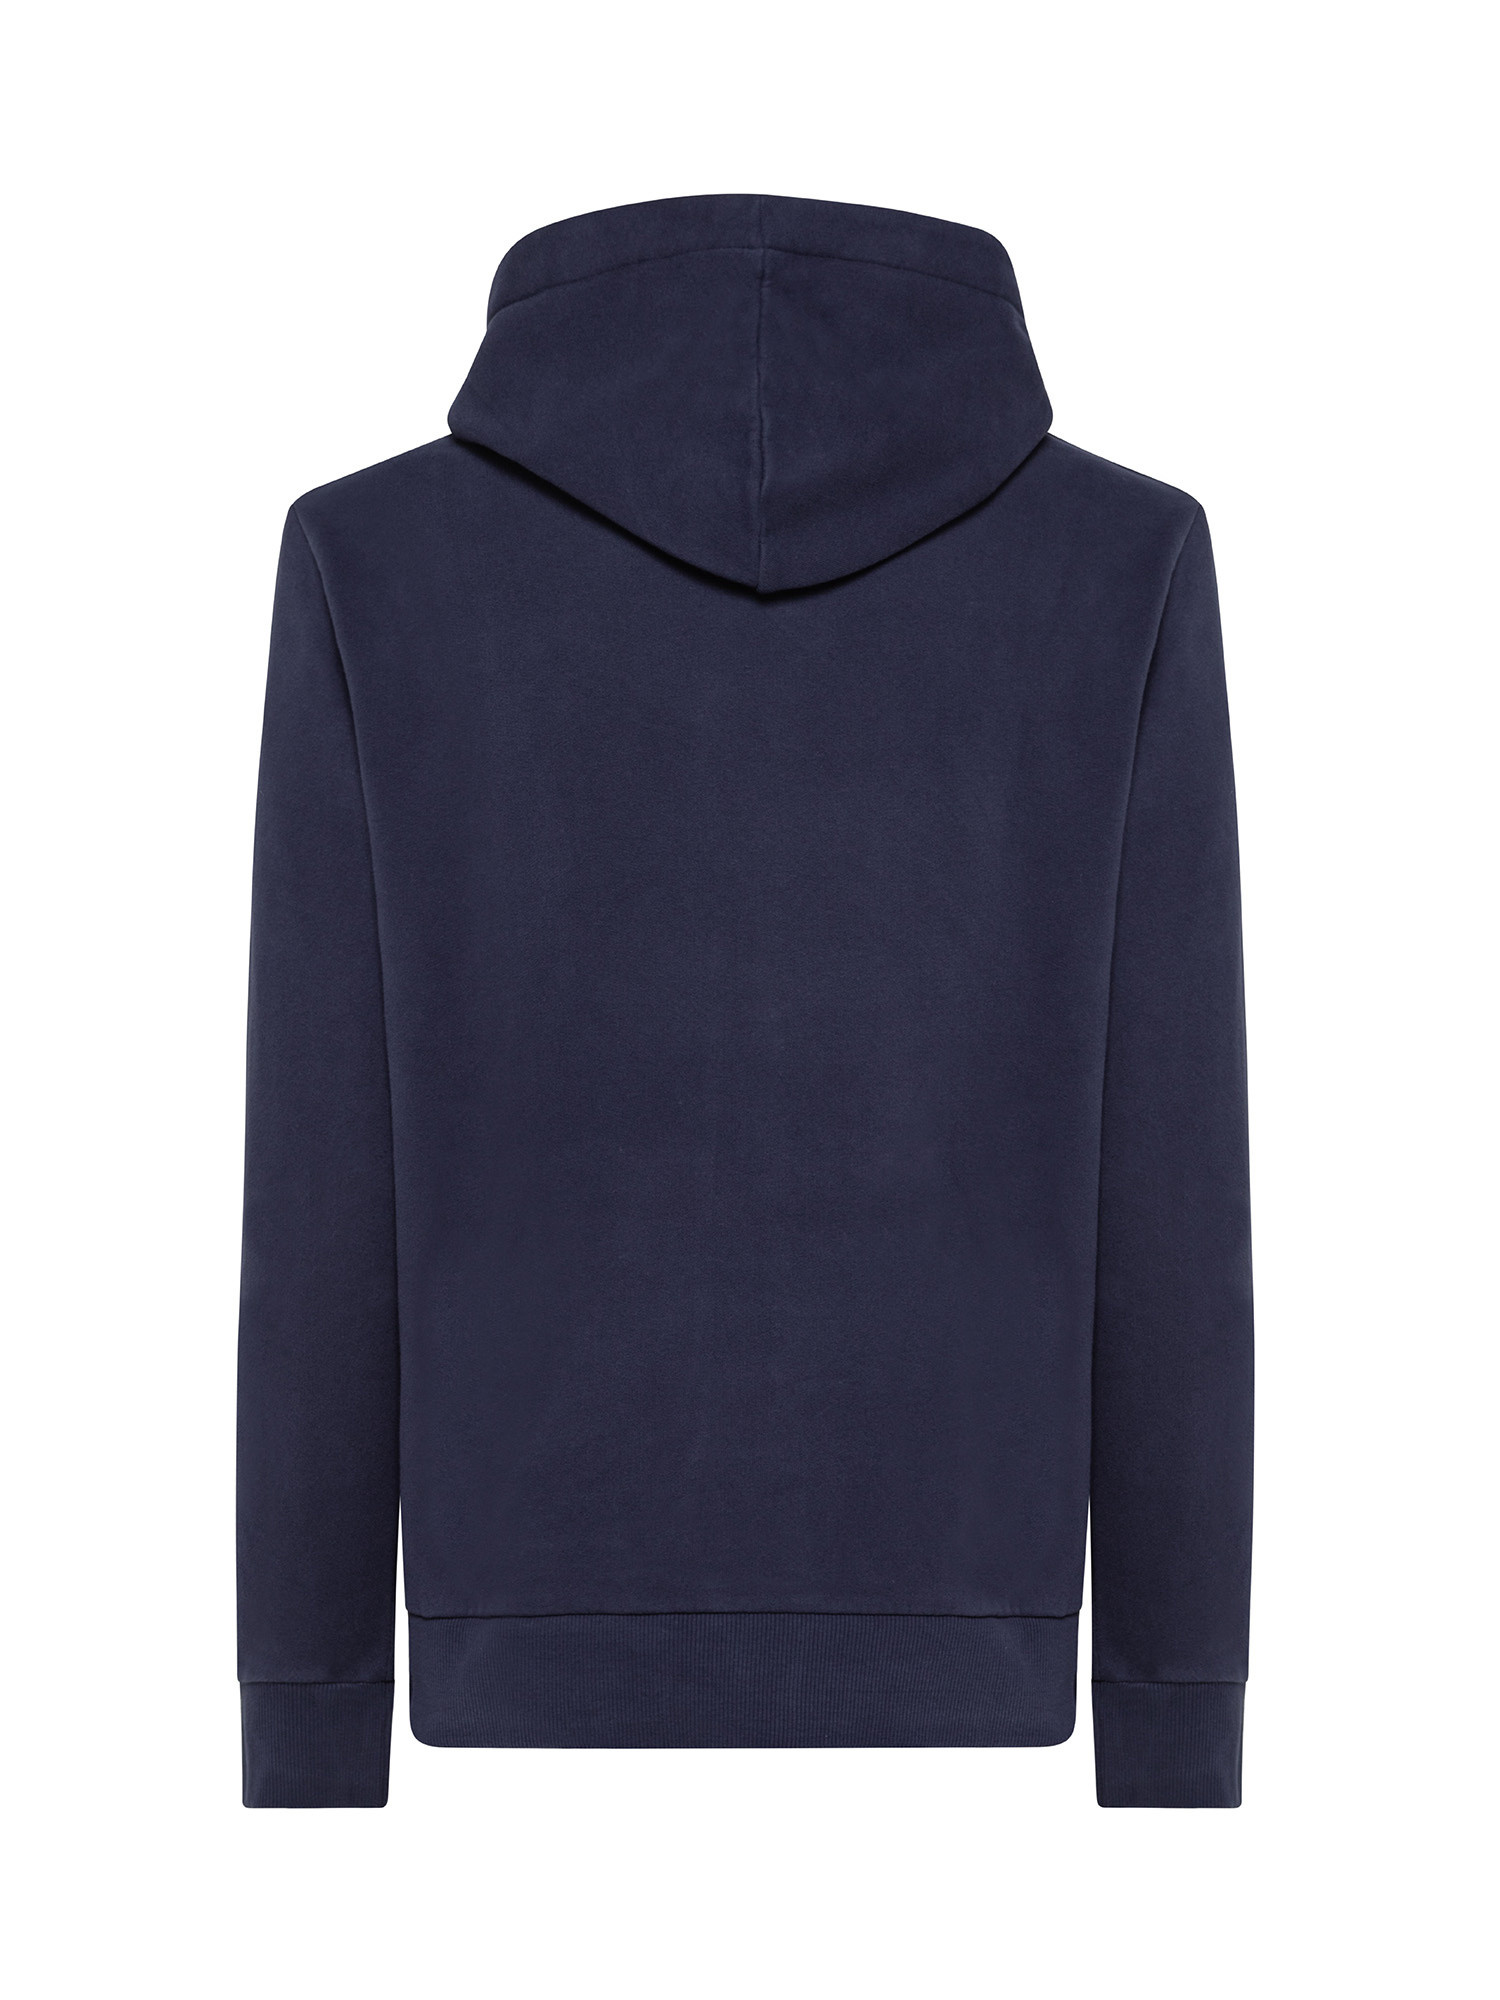 Superdry - Hooded sweatshirt with logo, Dark Blue, large image number 1